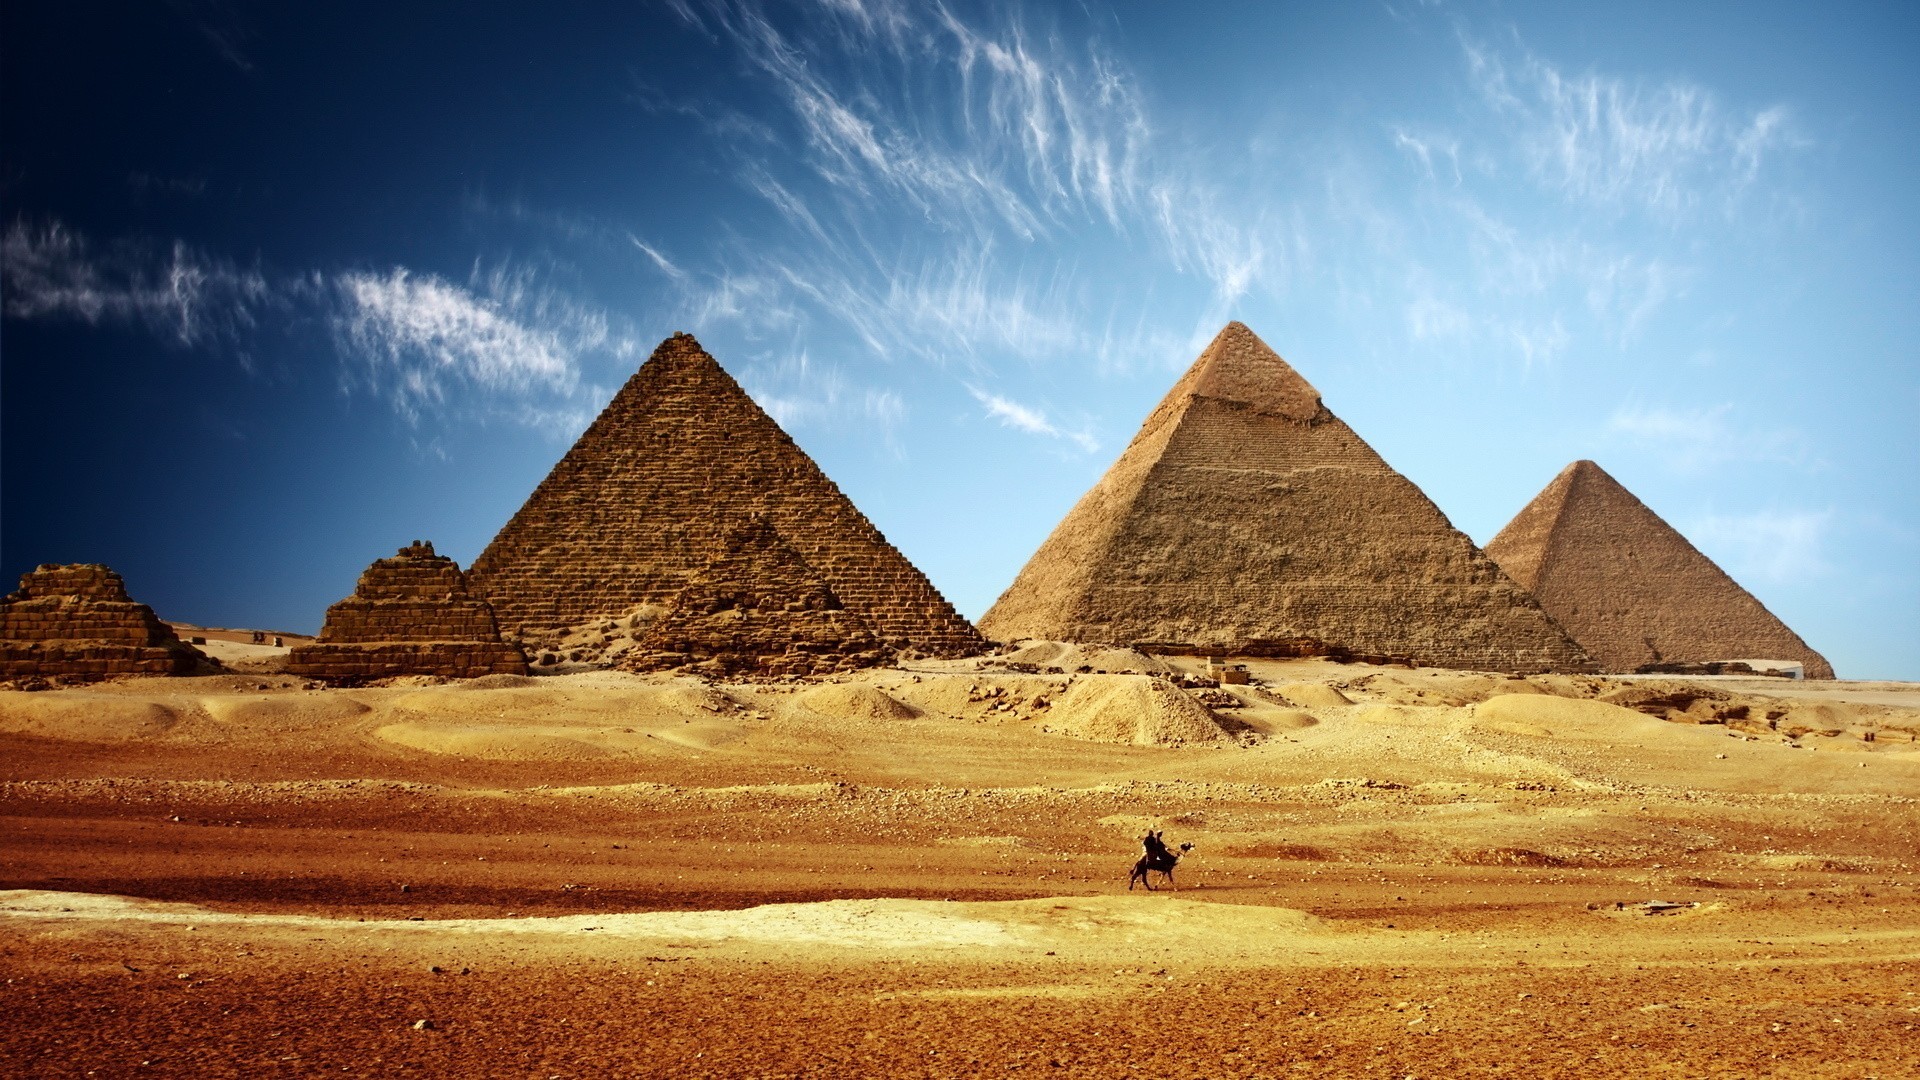 General 1920x1080 pyramid Egypt Pyramids of Giza desert history ancient landmark World Heritage Site Africa